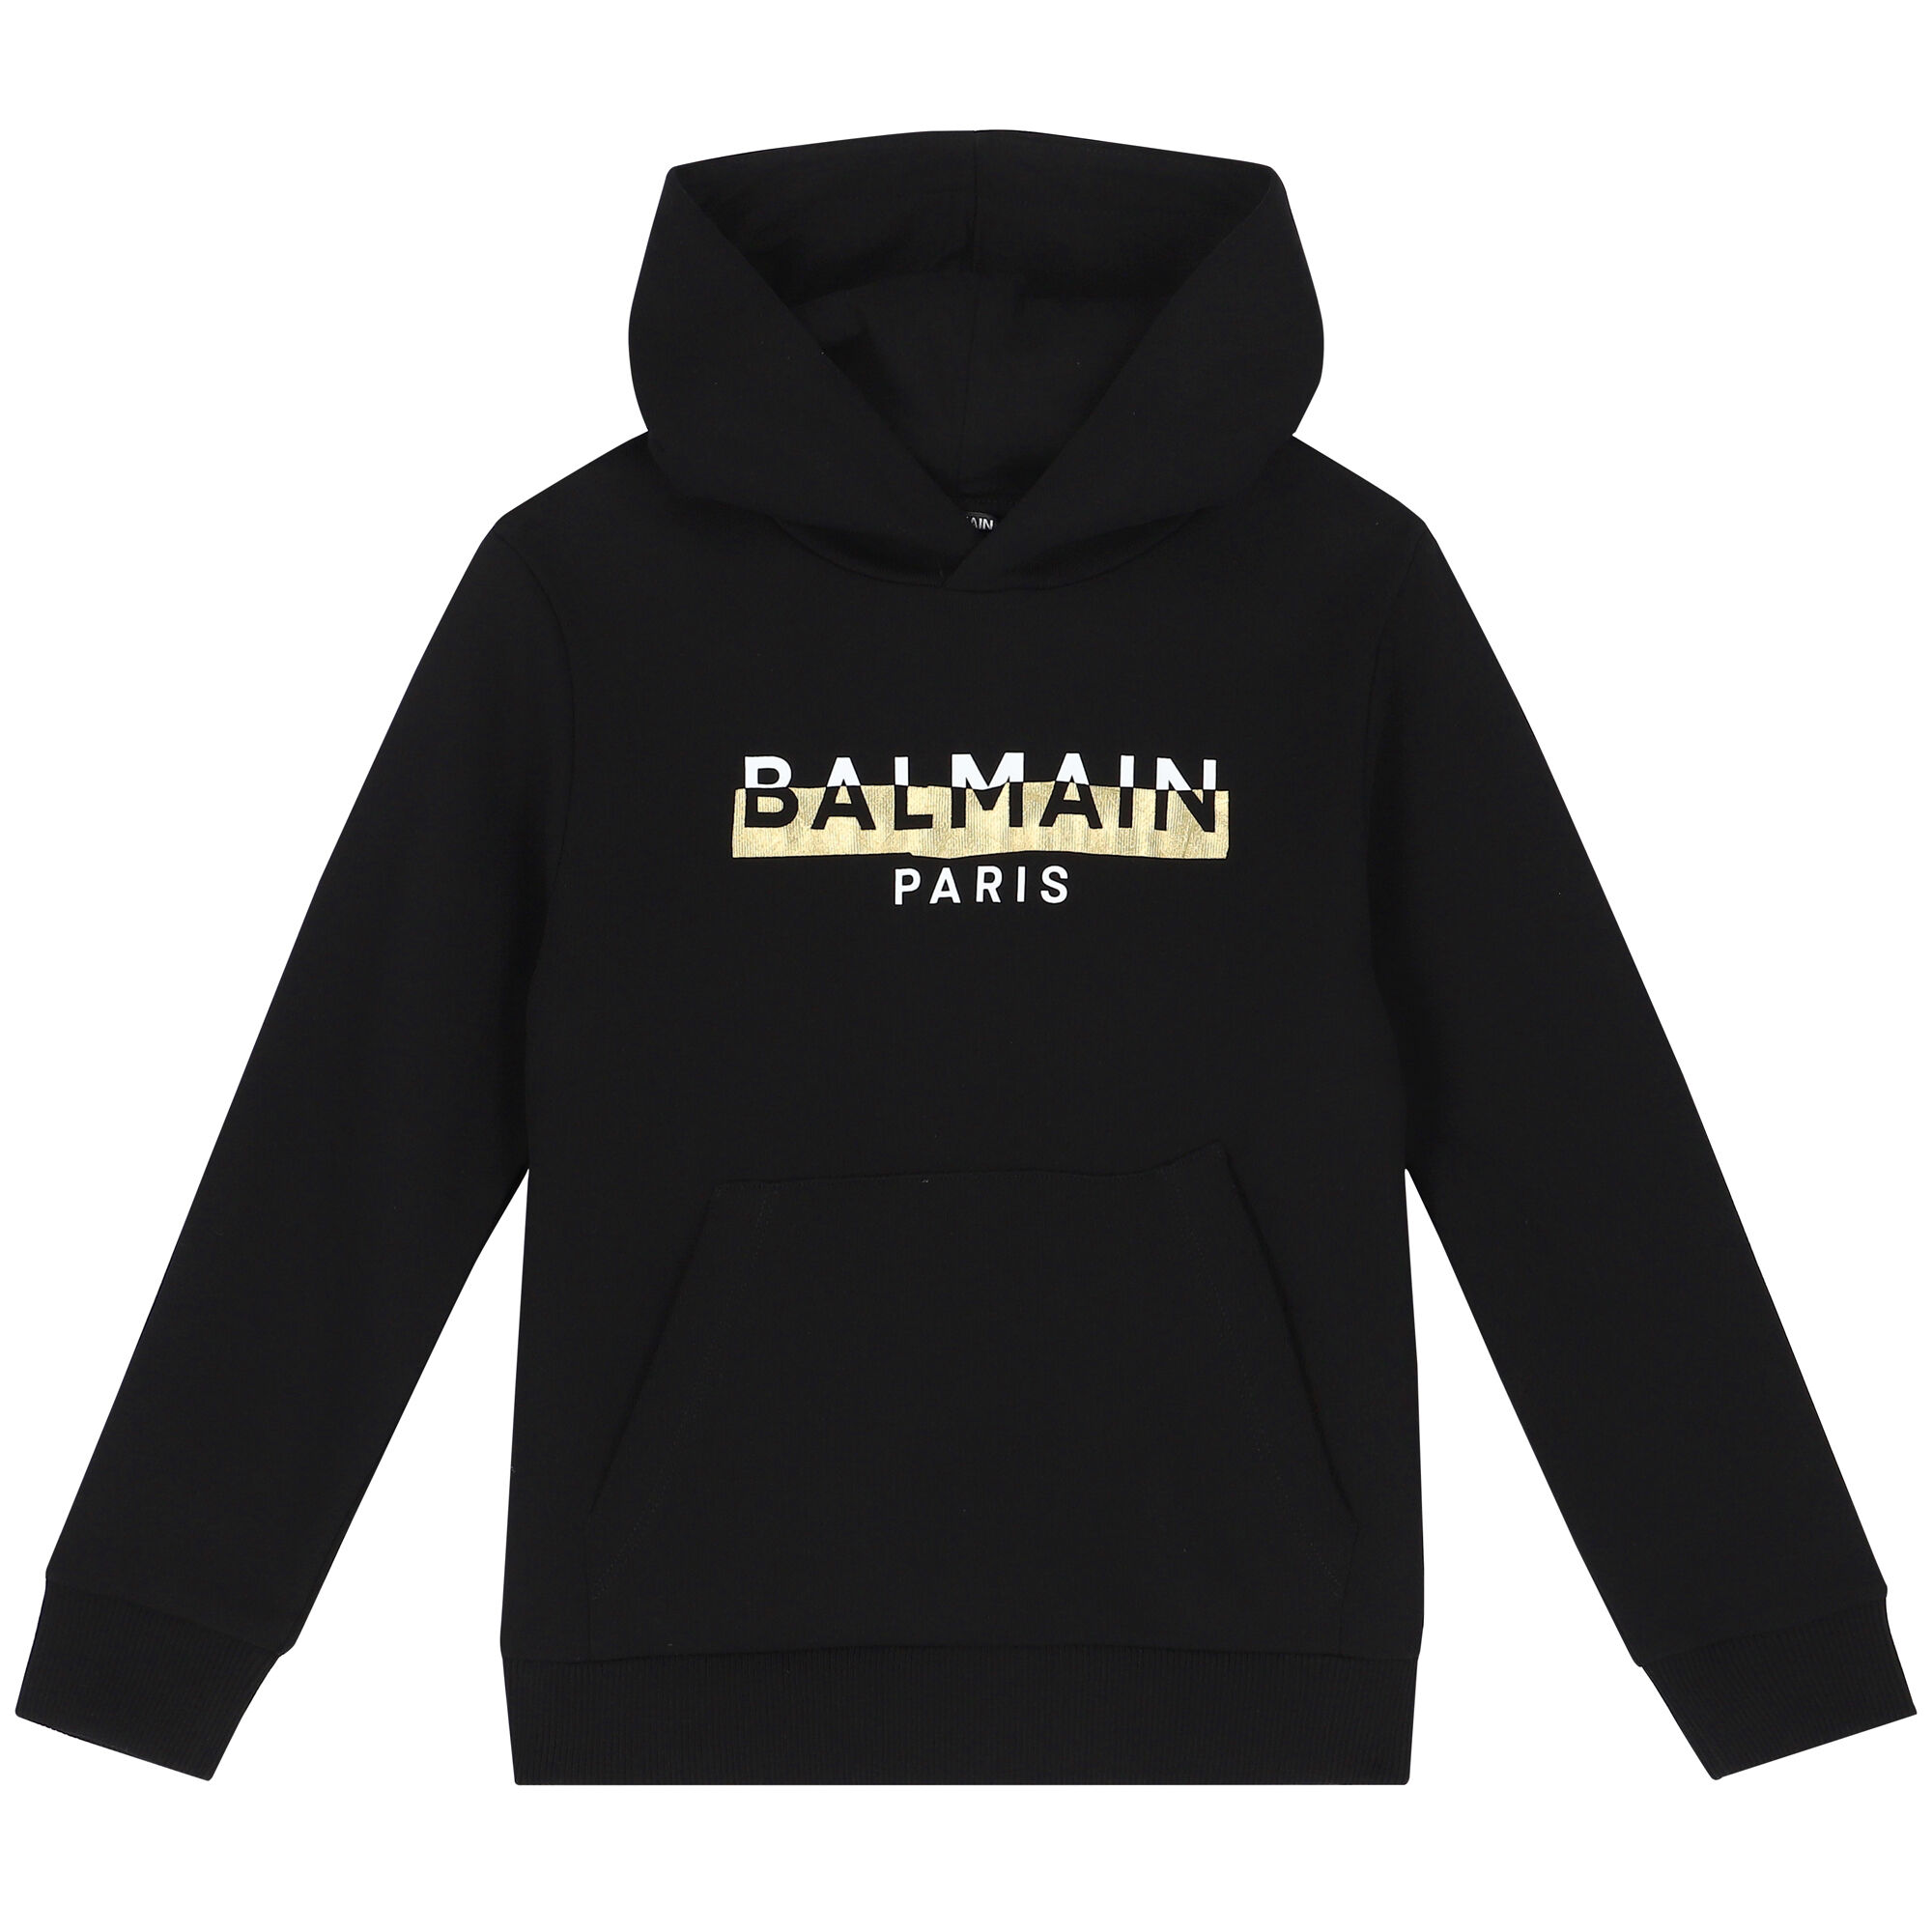 Camisola sweatshirt Balmain 16 anos Enfants Garçons Pulls & sweats Pulls à capuche & sweatshirts Balmain Pulls à capuche & sweatshirts 